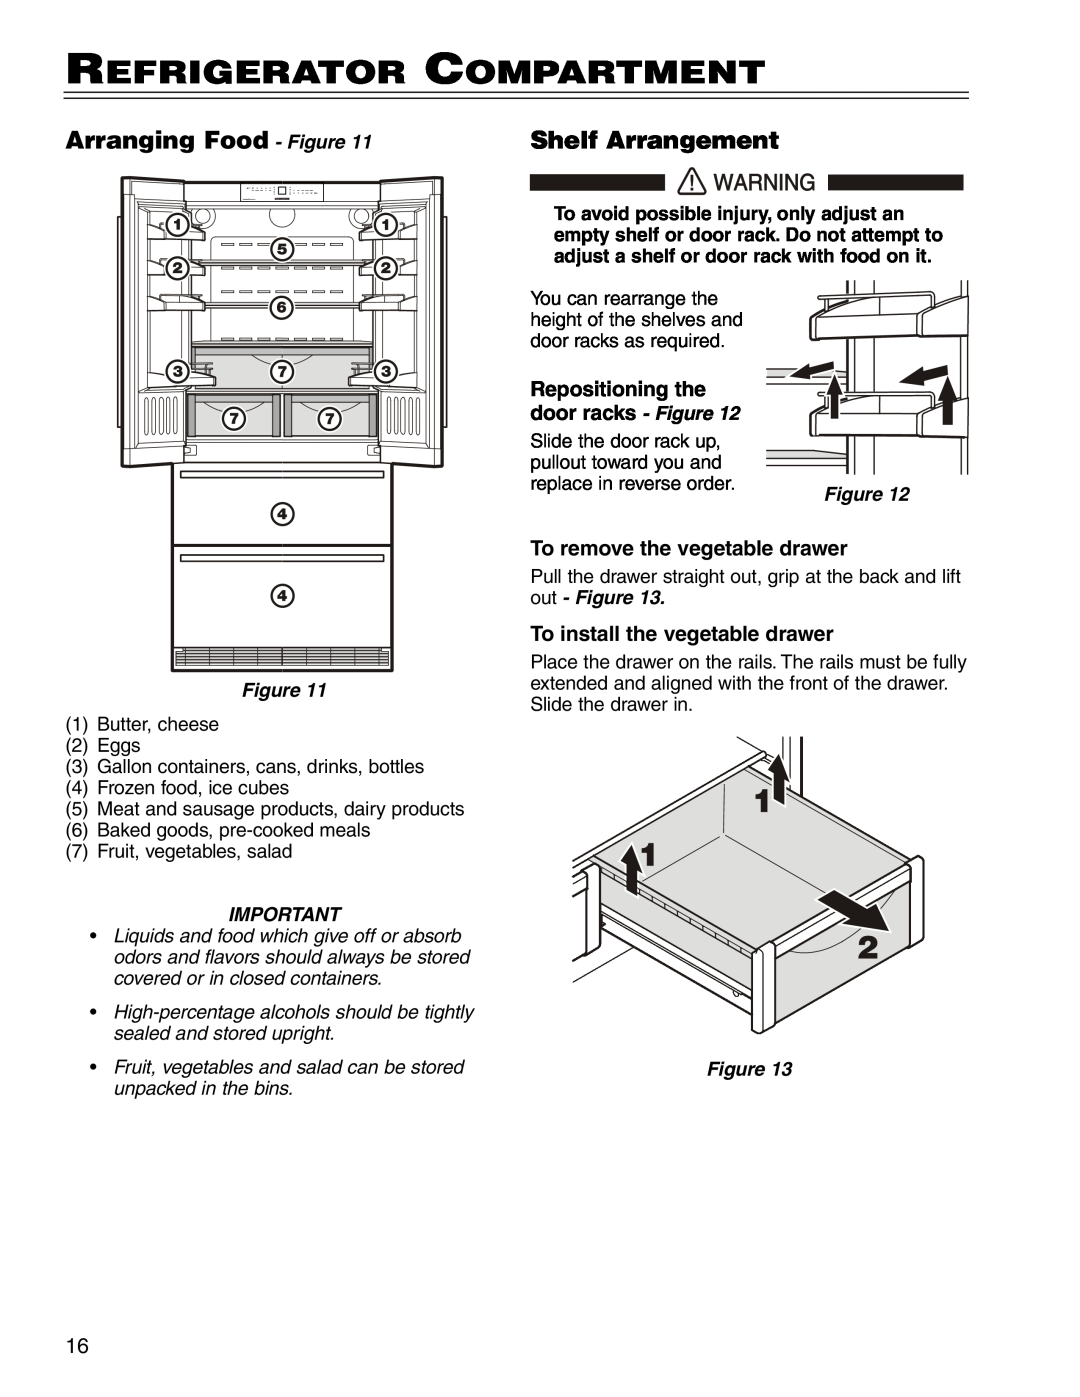 Liebherr HCS 7081411-00, HC 7081411-00 manual Refrigerator Compartment, Arranging Food - Figure, Shelf Arrangement 